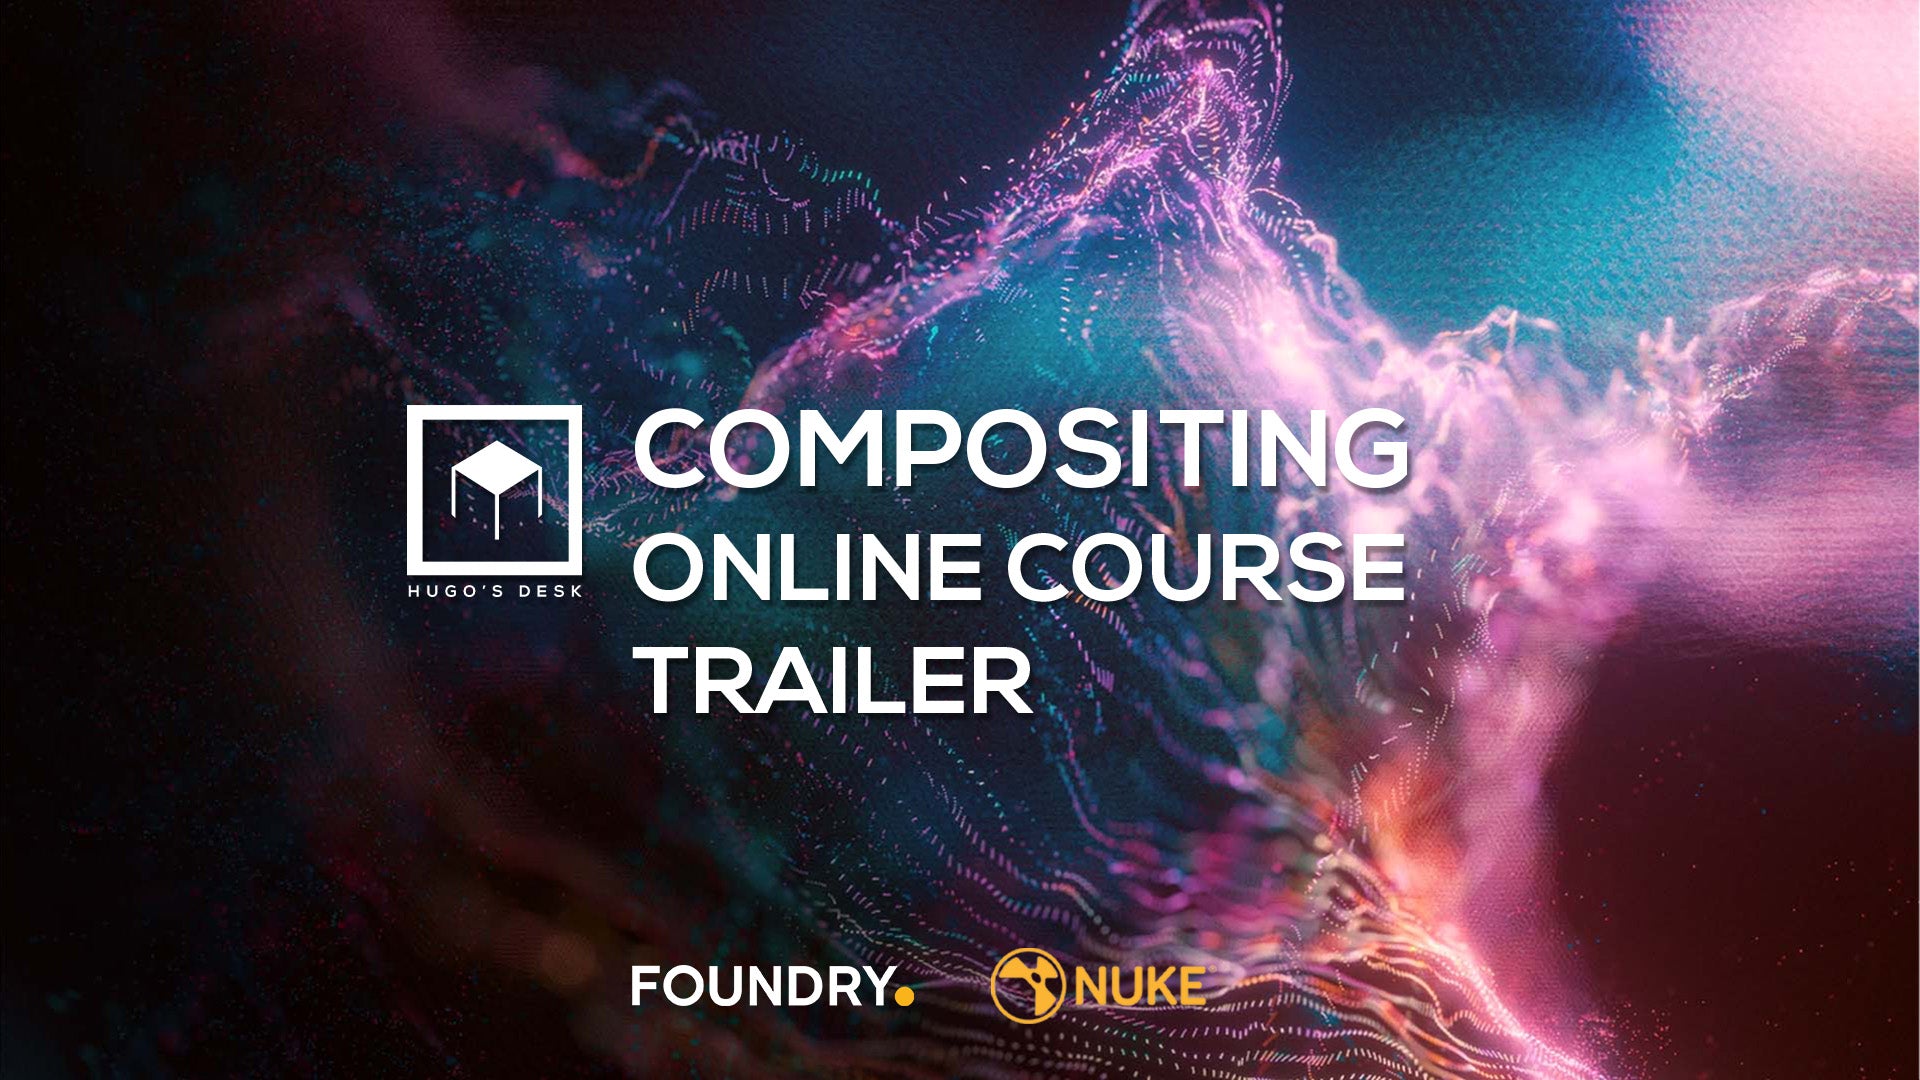 Nuke compositing course trailer